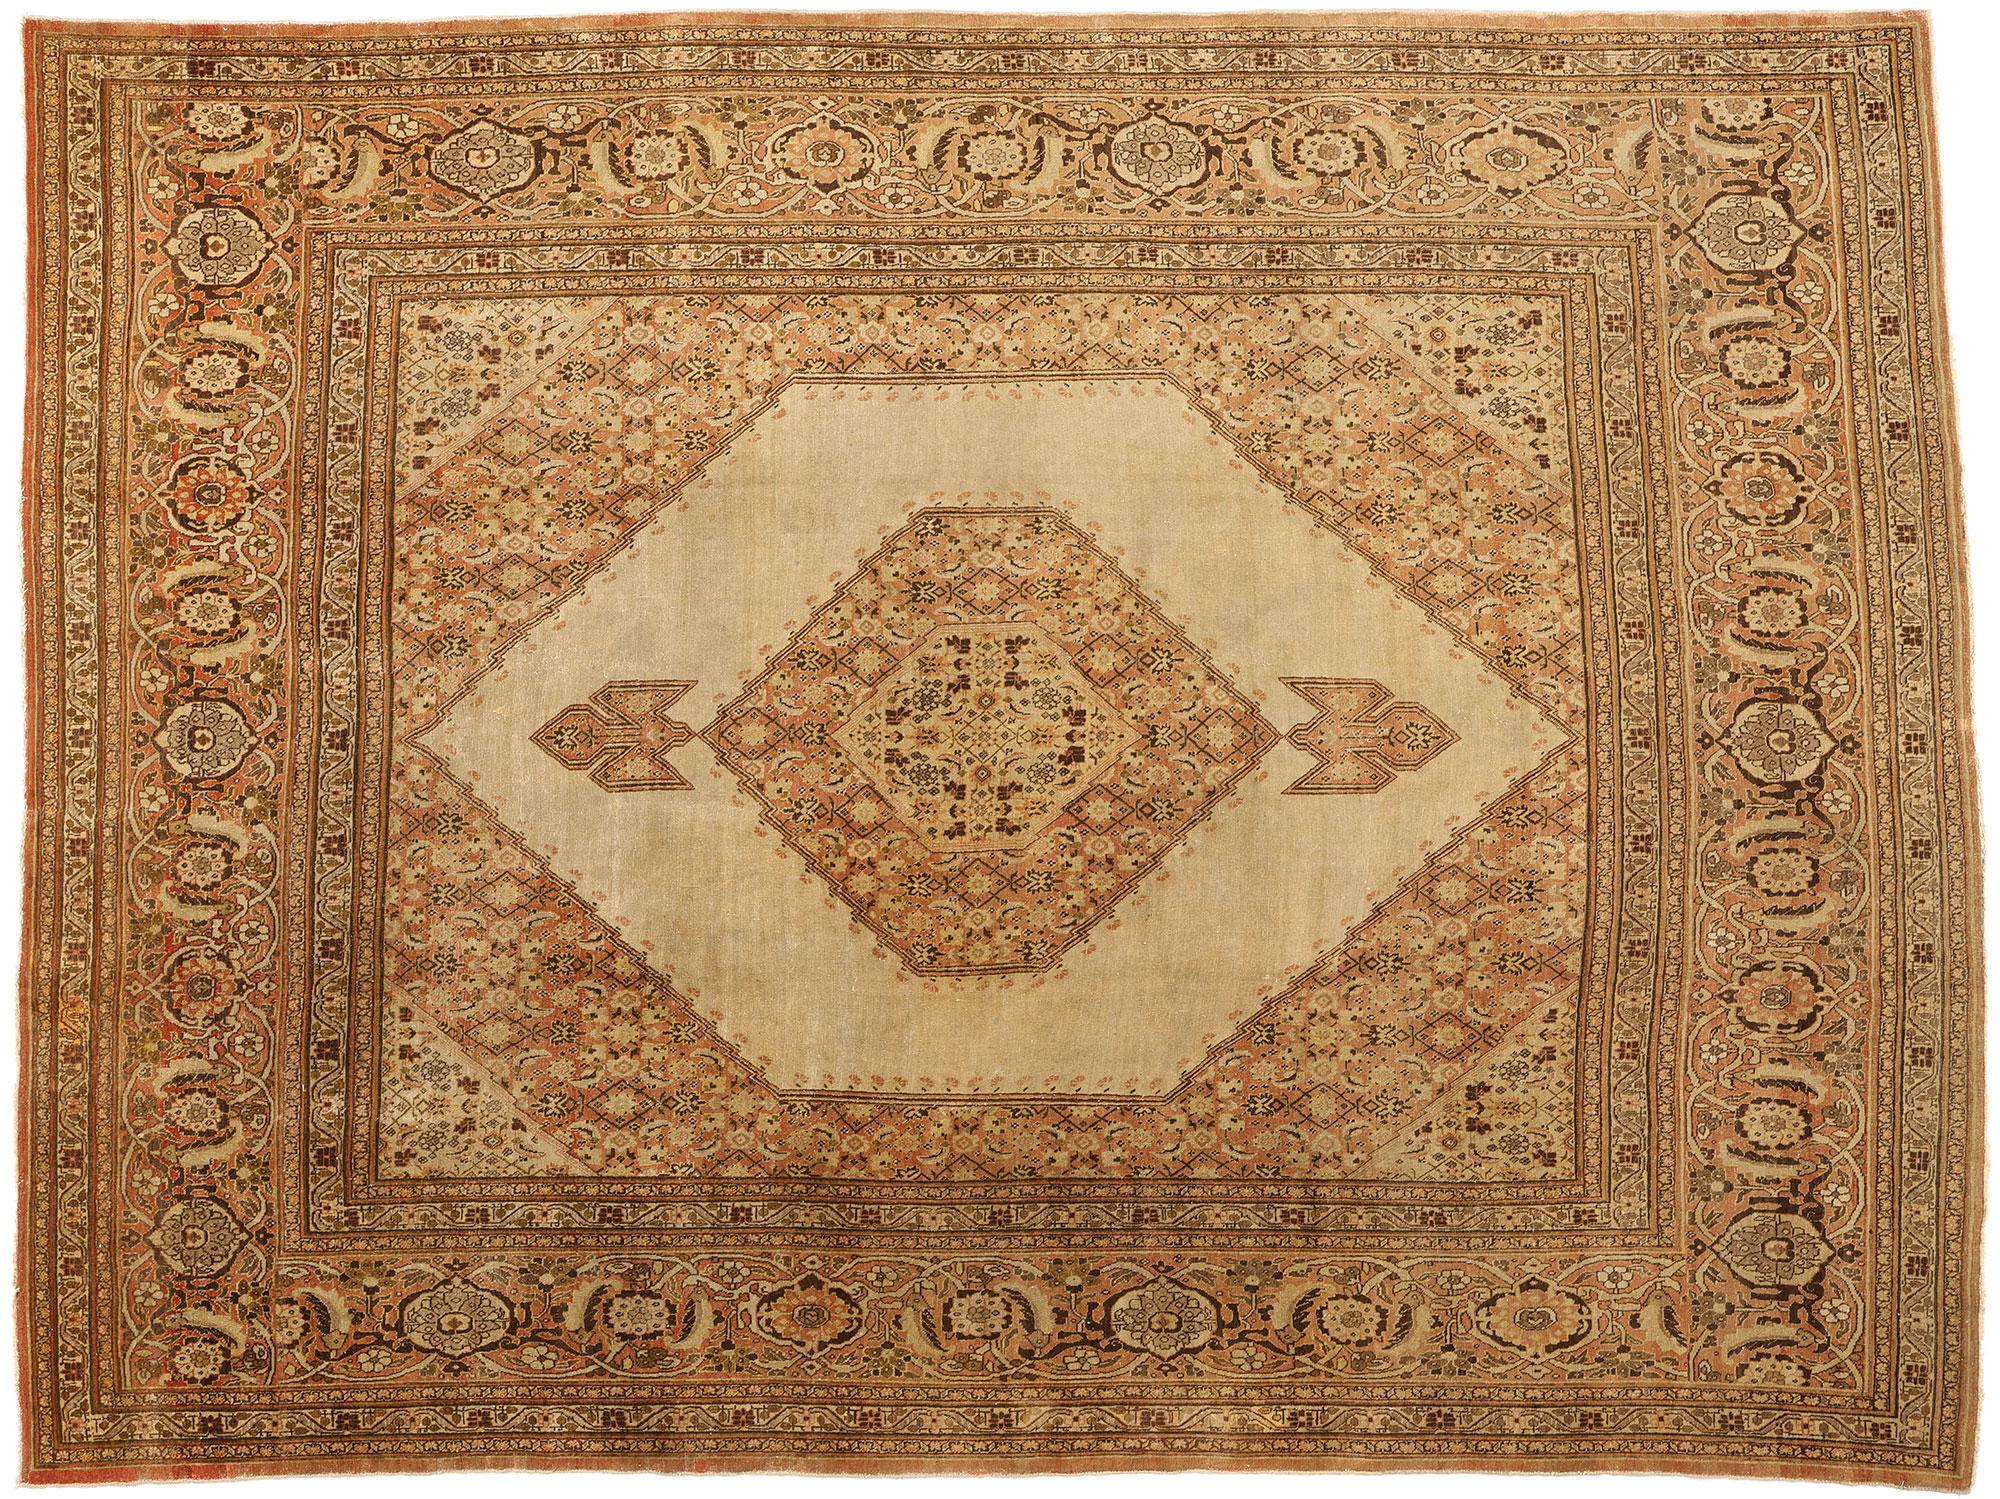 Haji Khalili Antique Persian Tabriz Carpet, 09'05 x 12'07 For Sale 3